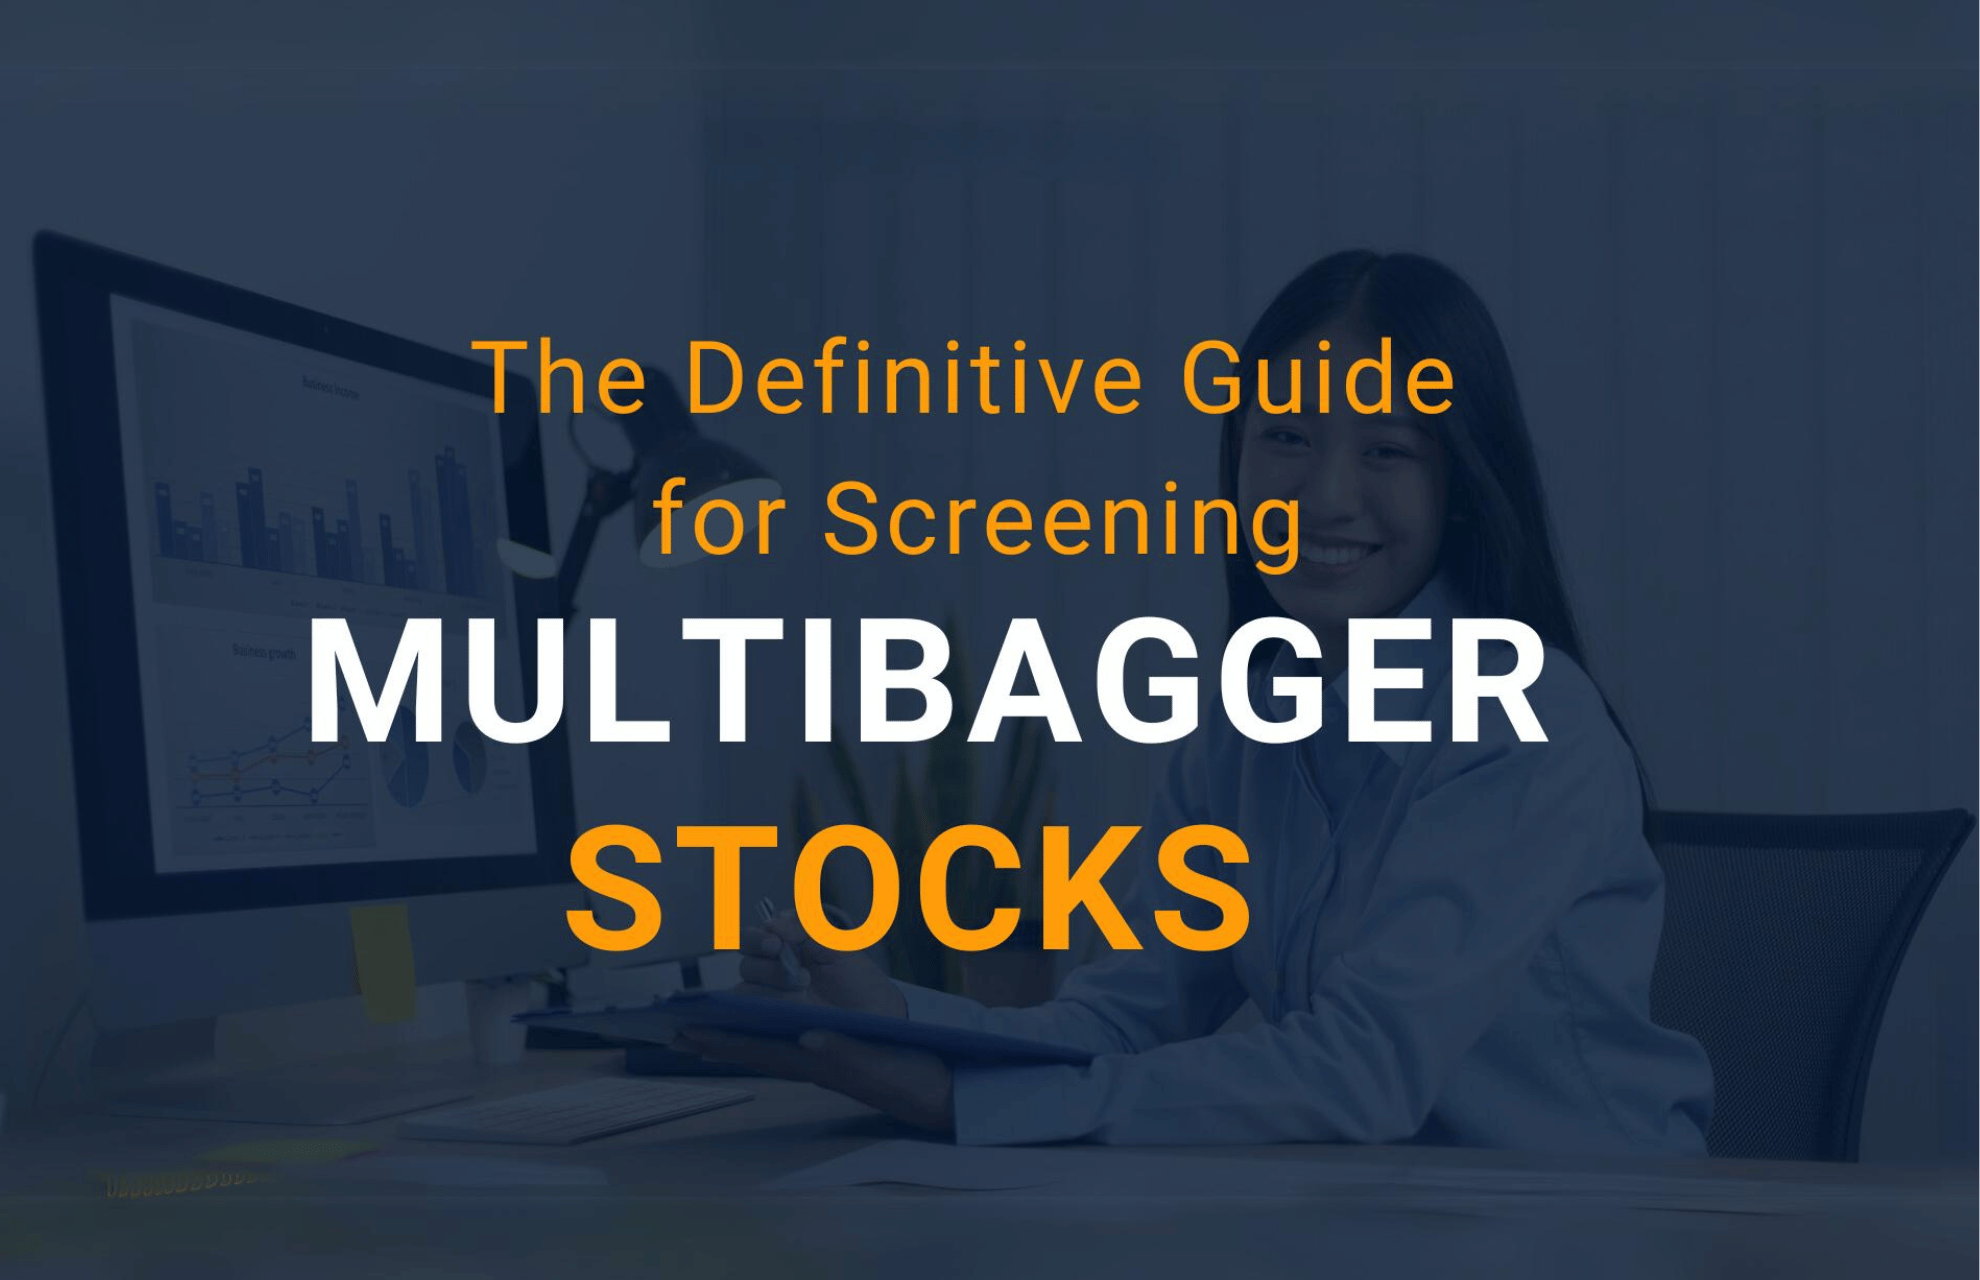 The Definitive Guide for Screening Multibagger Stocks